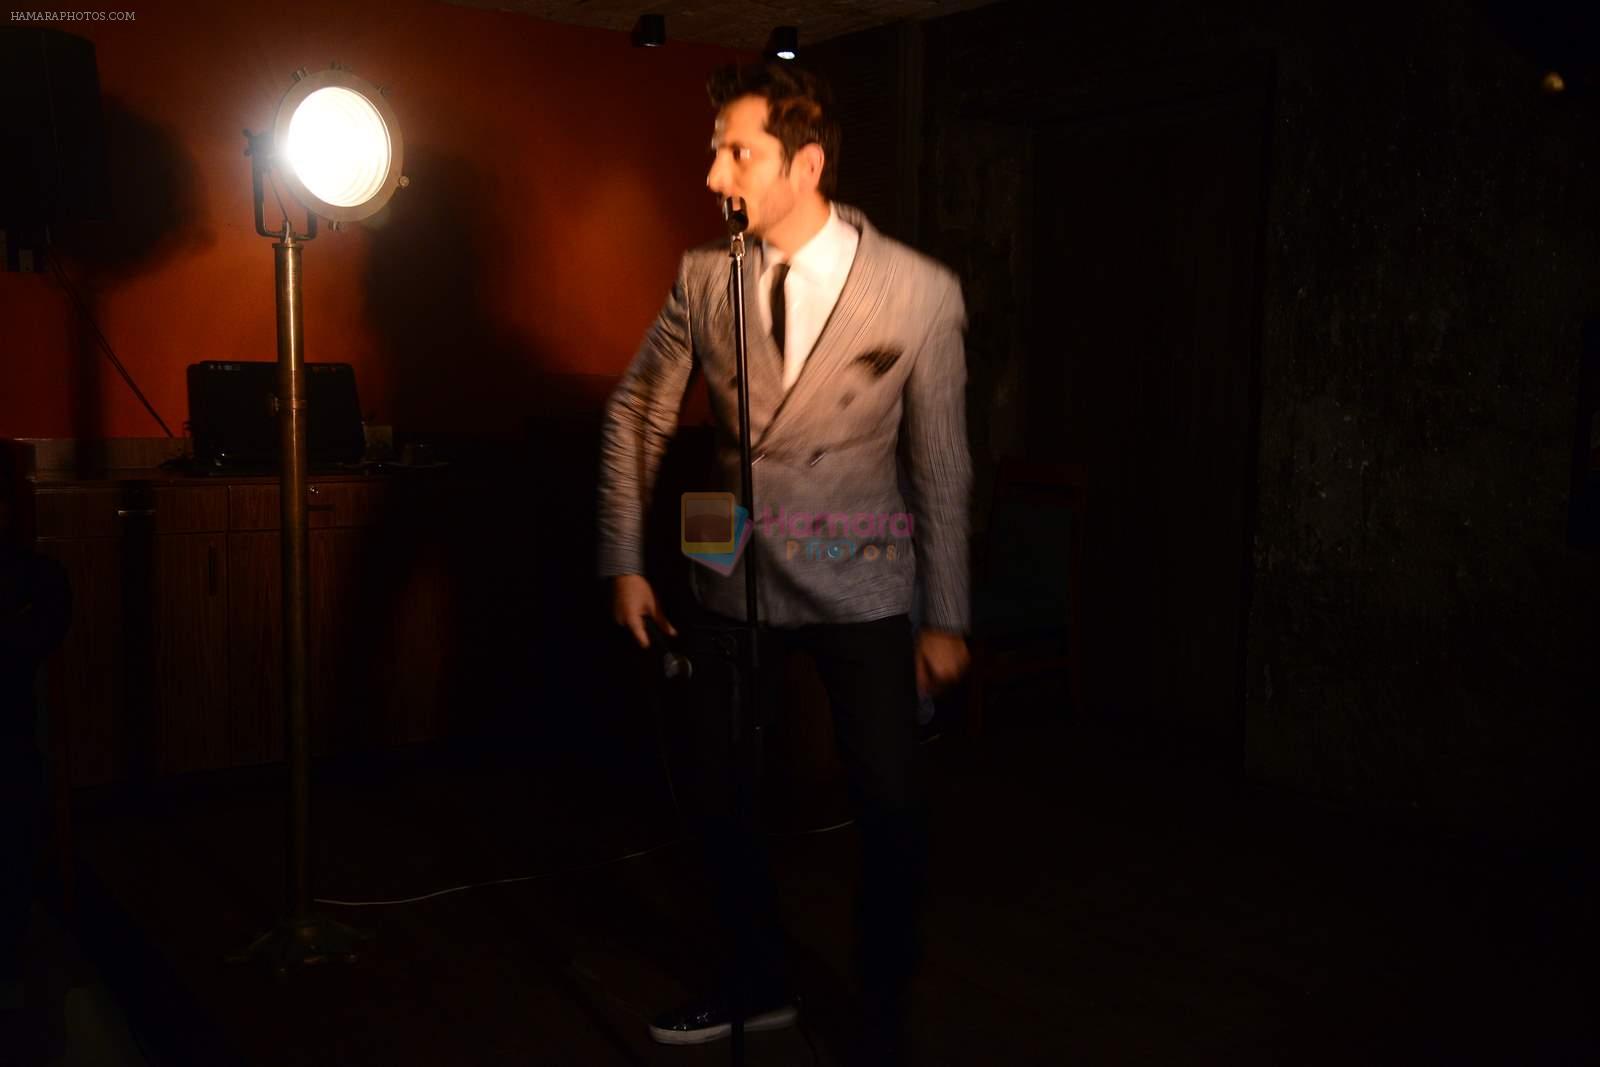 Nitin Mirani's comedy night in Lightbox on 22nd July 2015